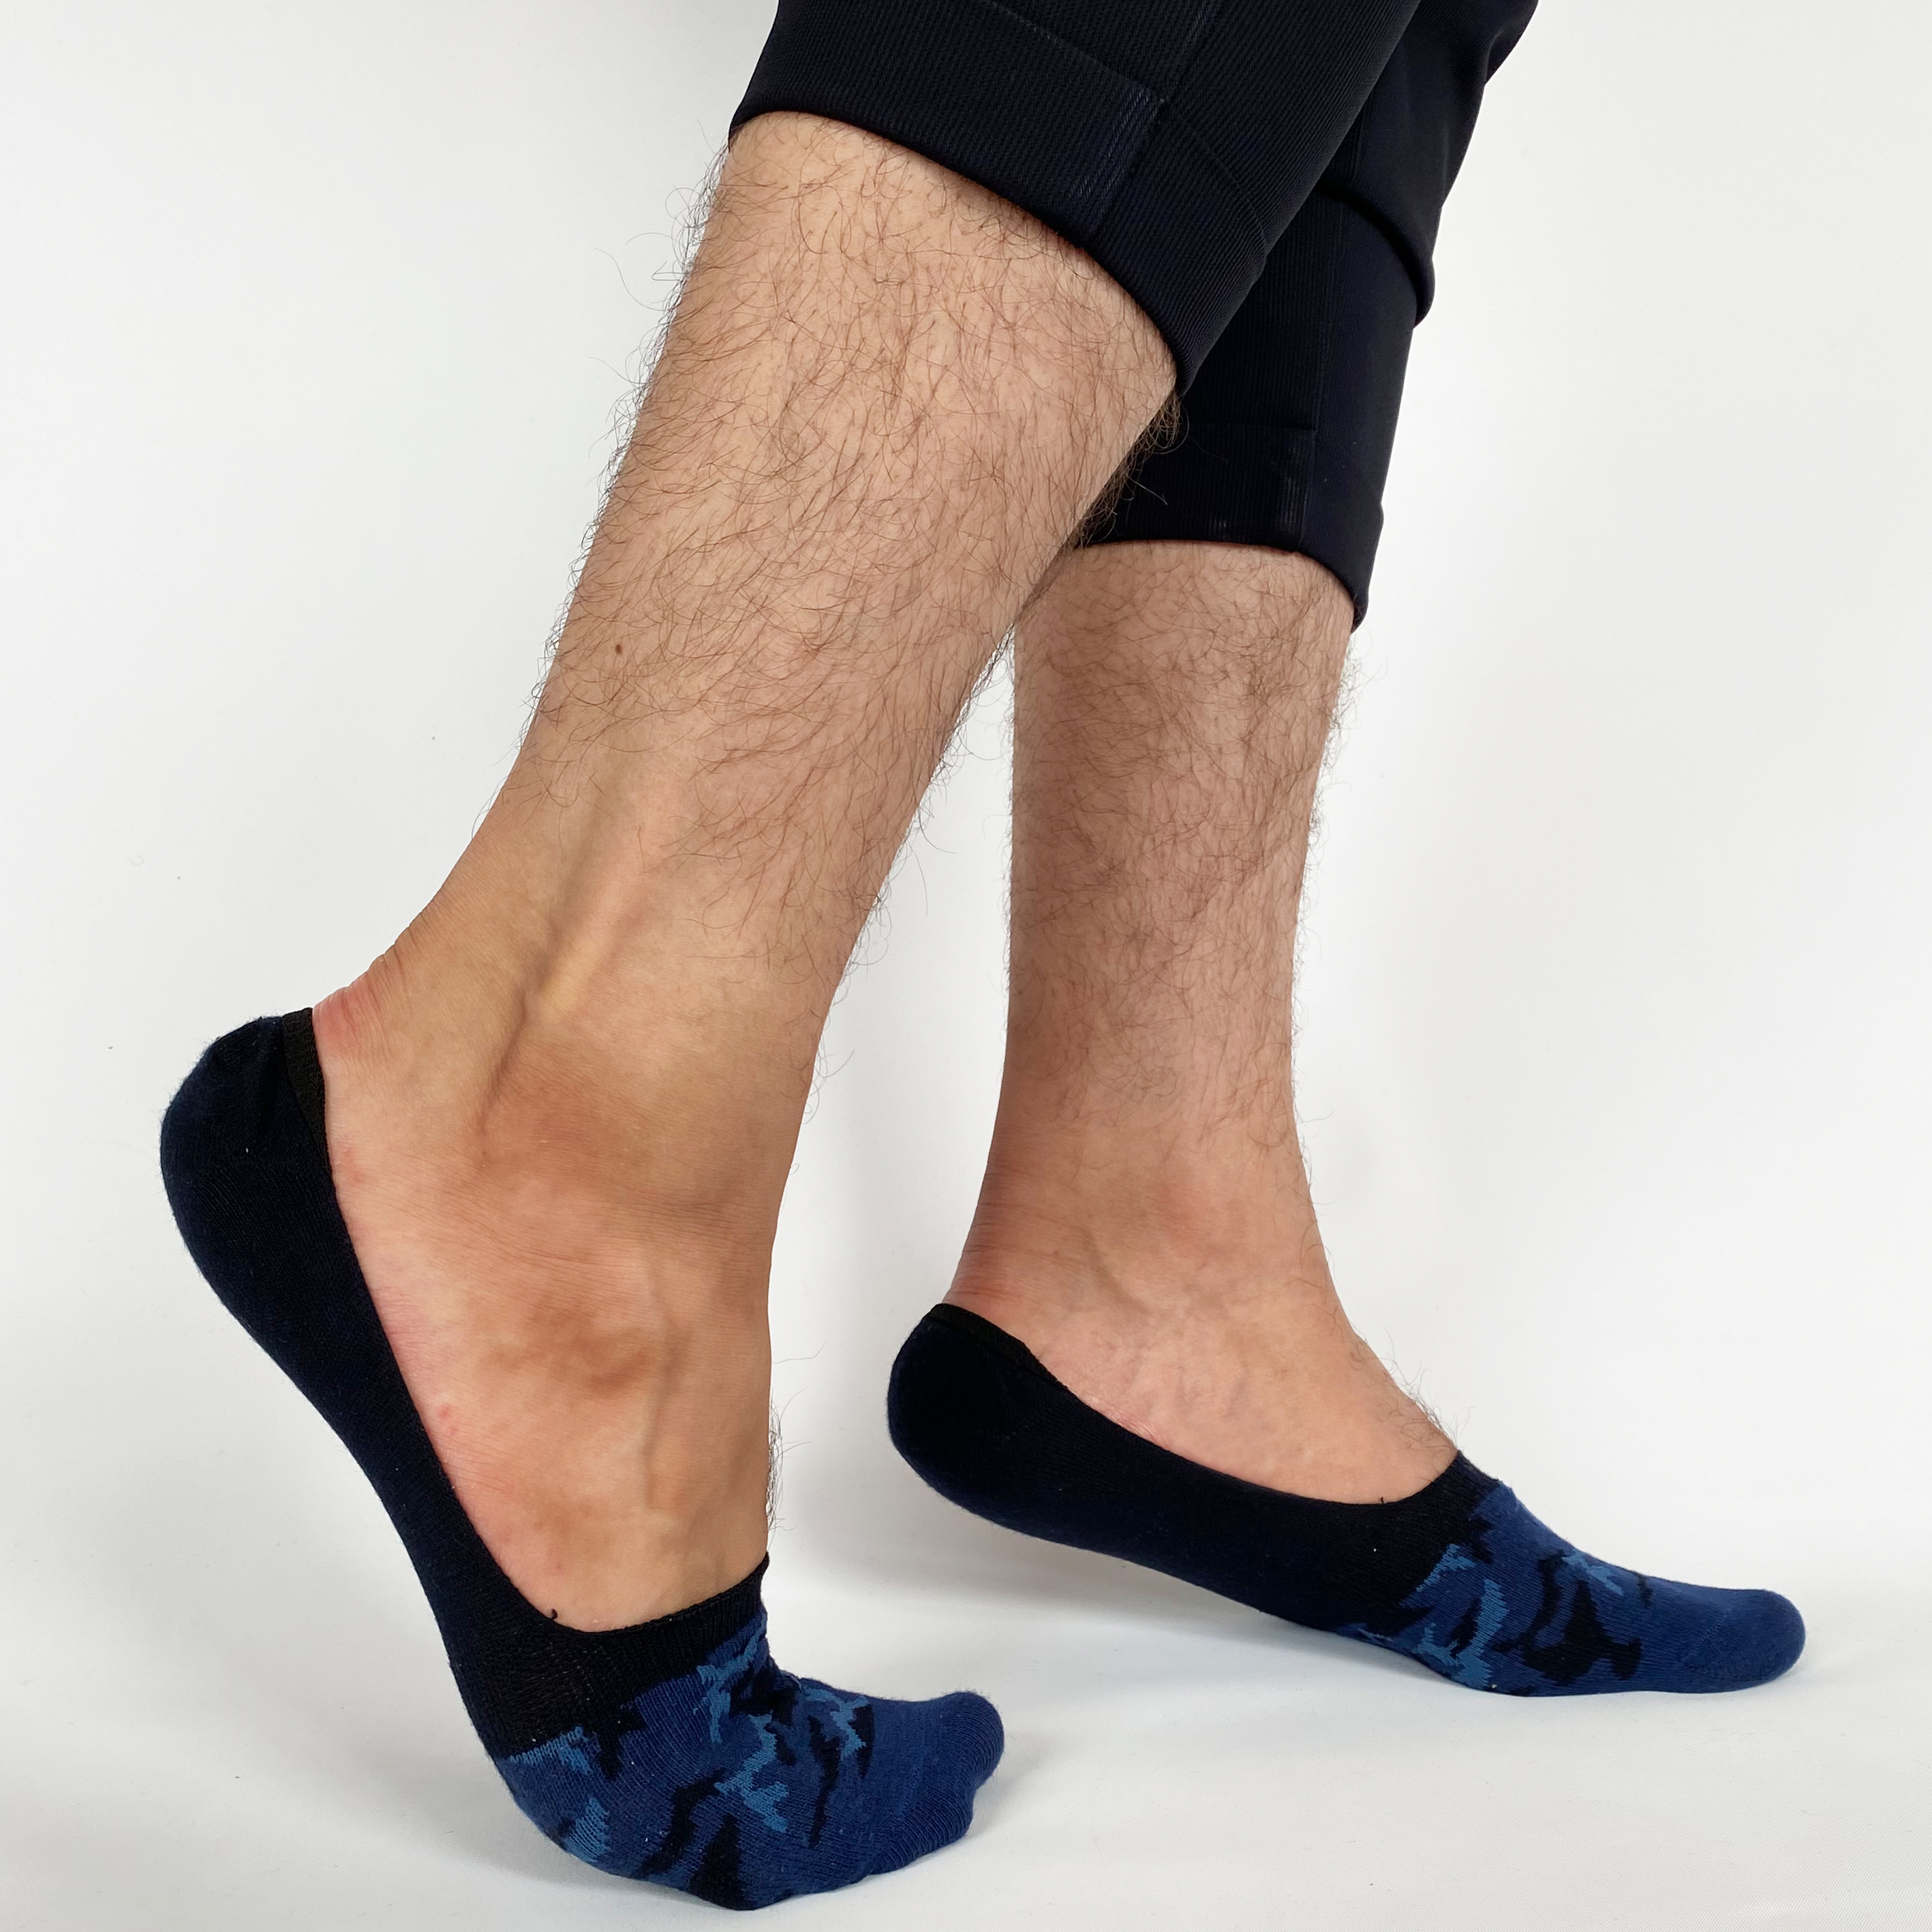 12x Pairs Men's Women's White & Black Cotton Rich Summer Invisible Trainer Socks 